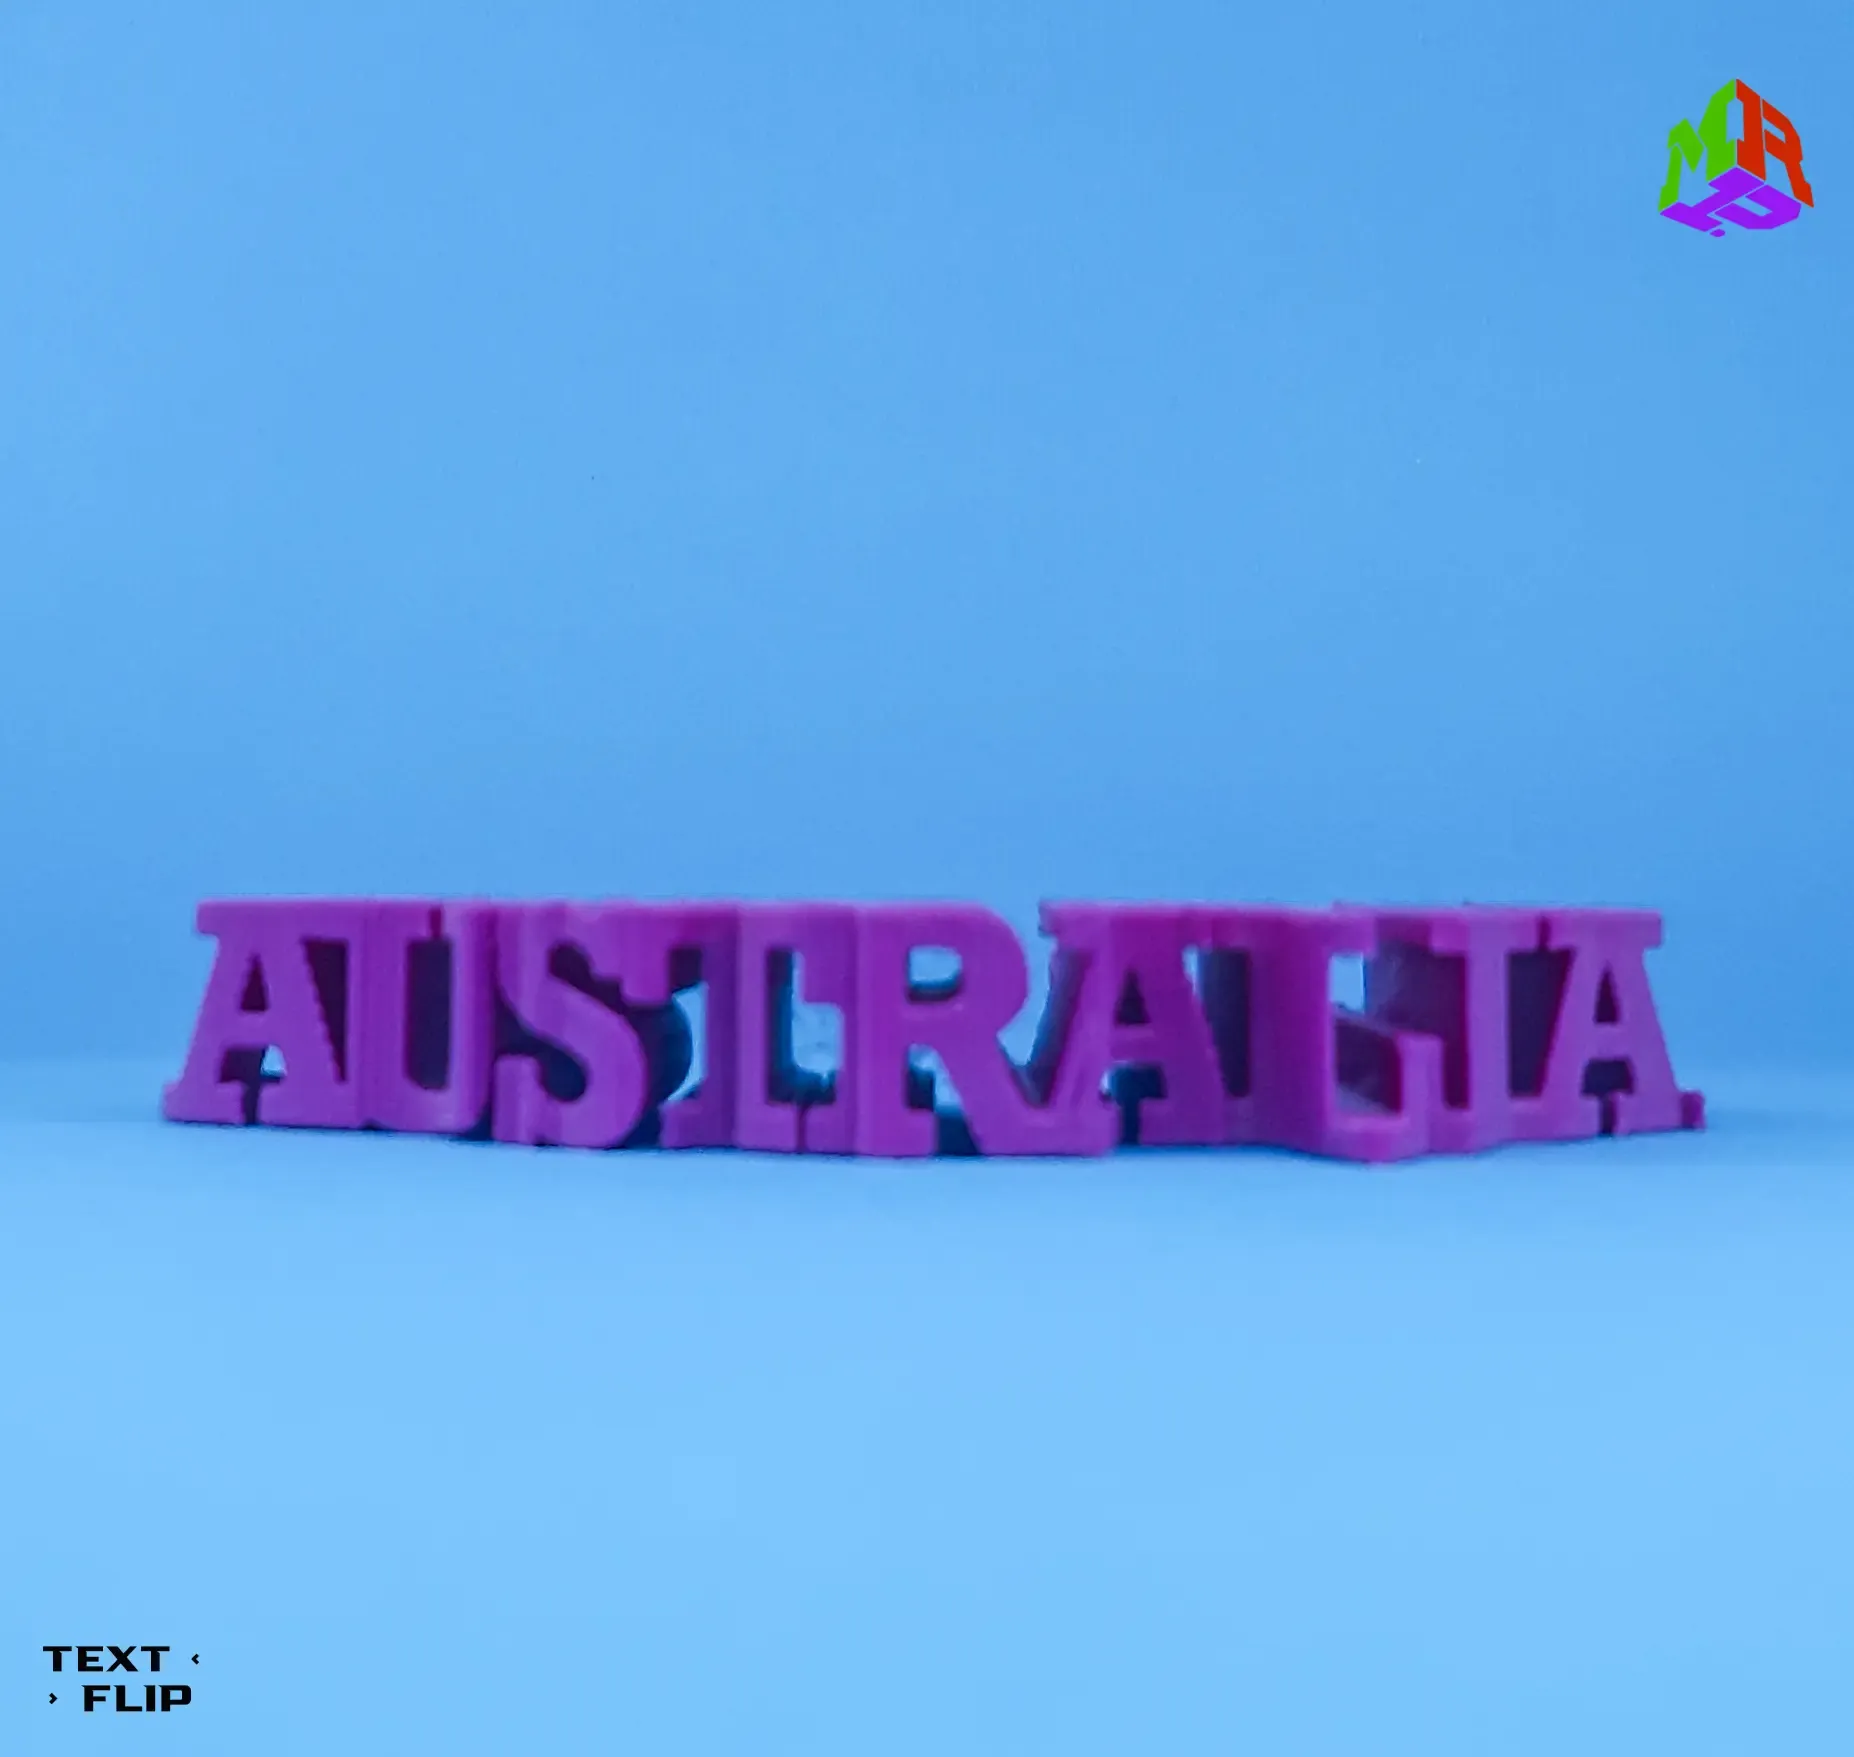 Text Flip - Australia